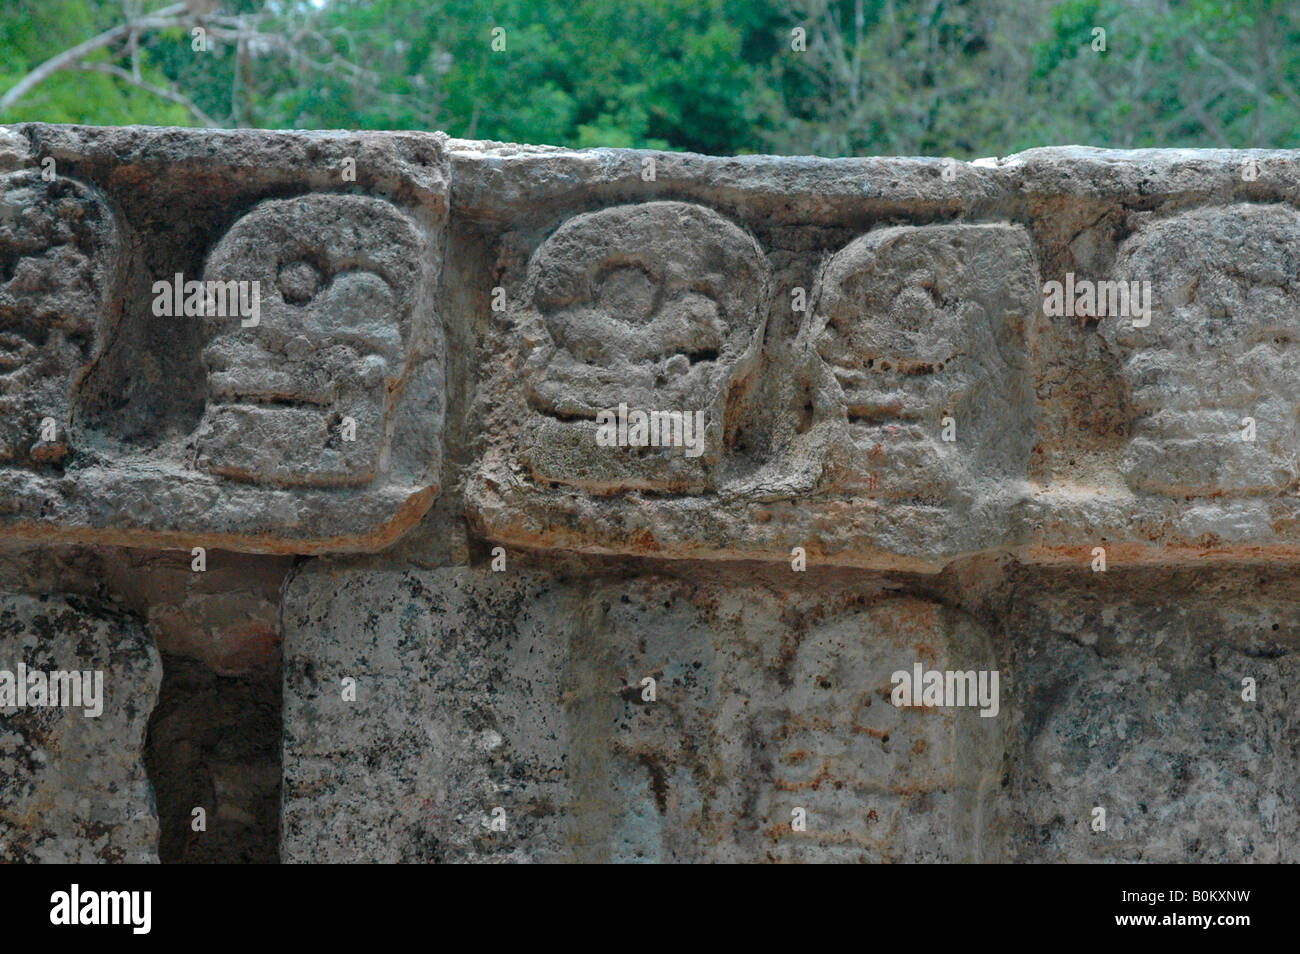 Ancient City of Chichen Itza Yucatan Peninsula Mayan Riviera Wonder Marvel of the World UNESCO Stock Photo